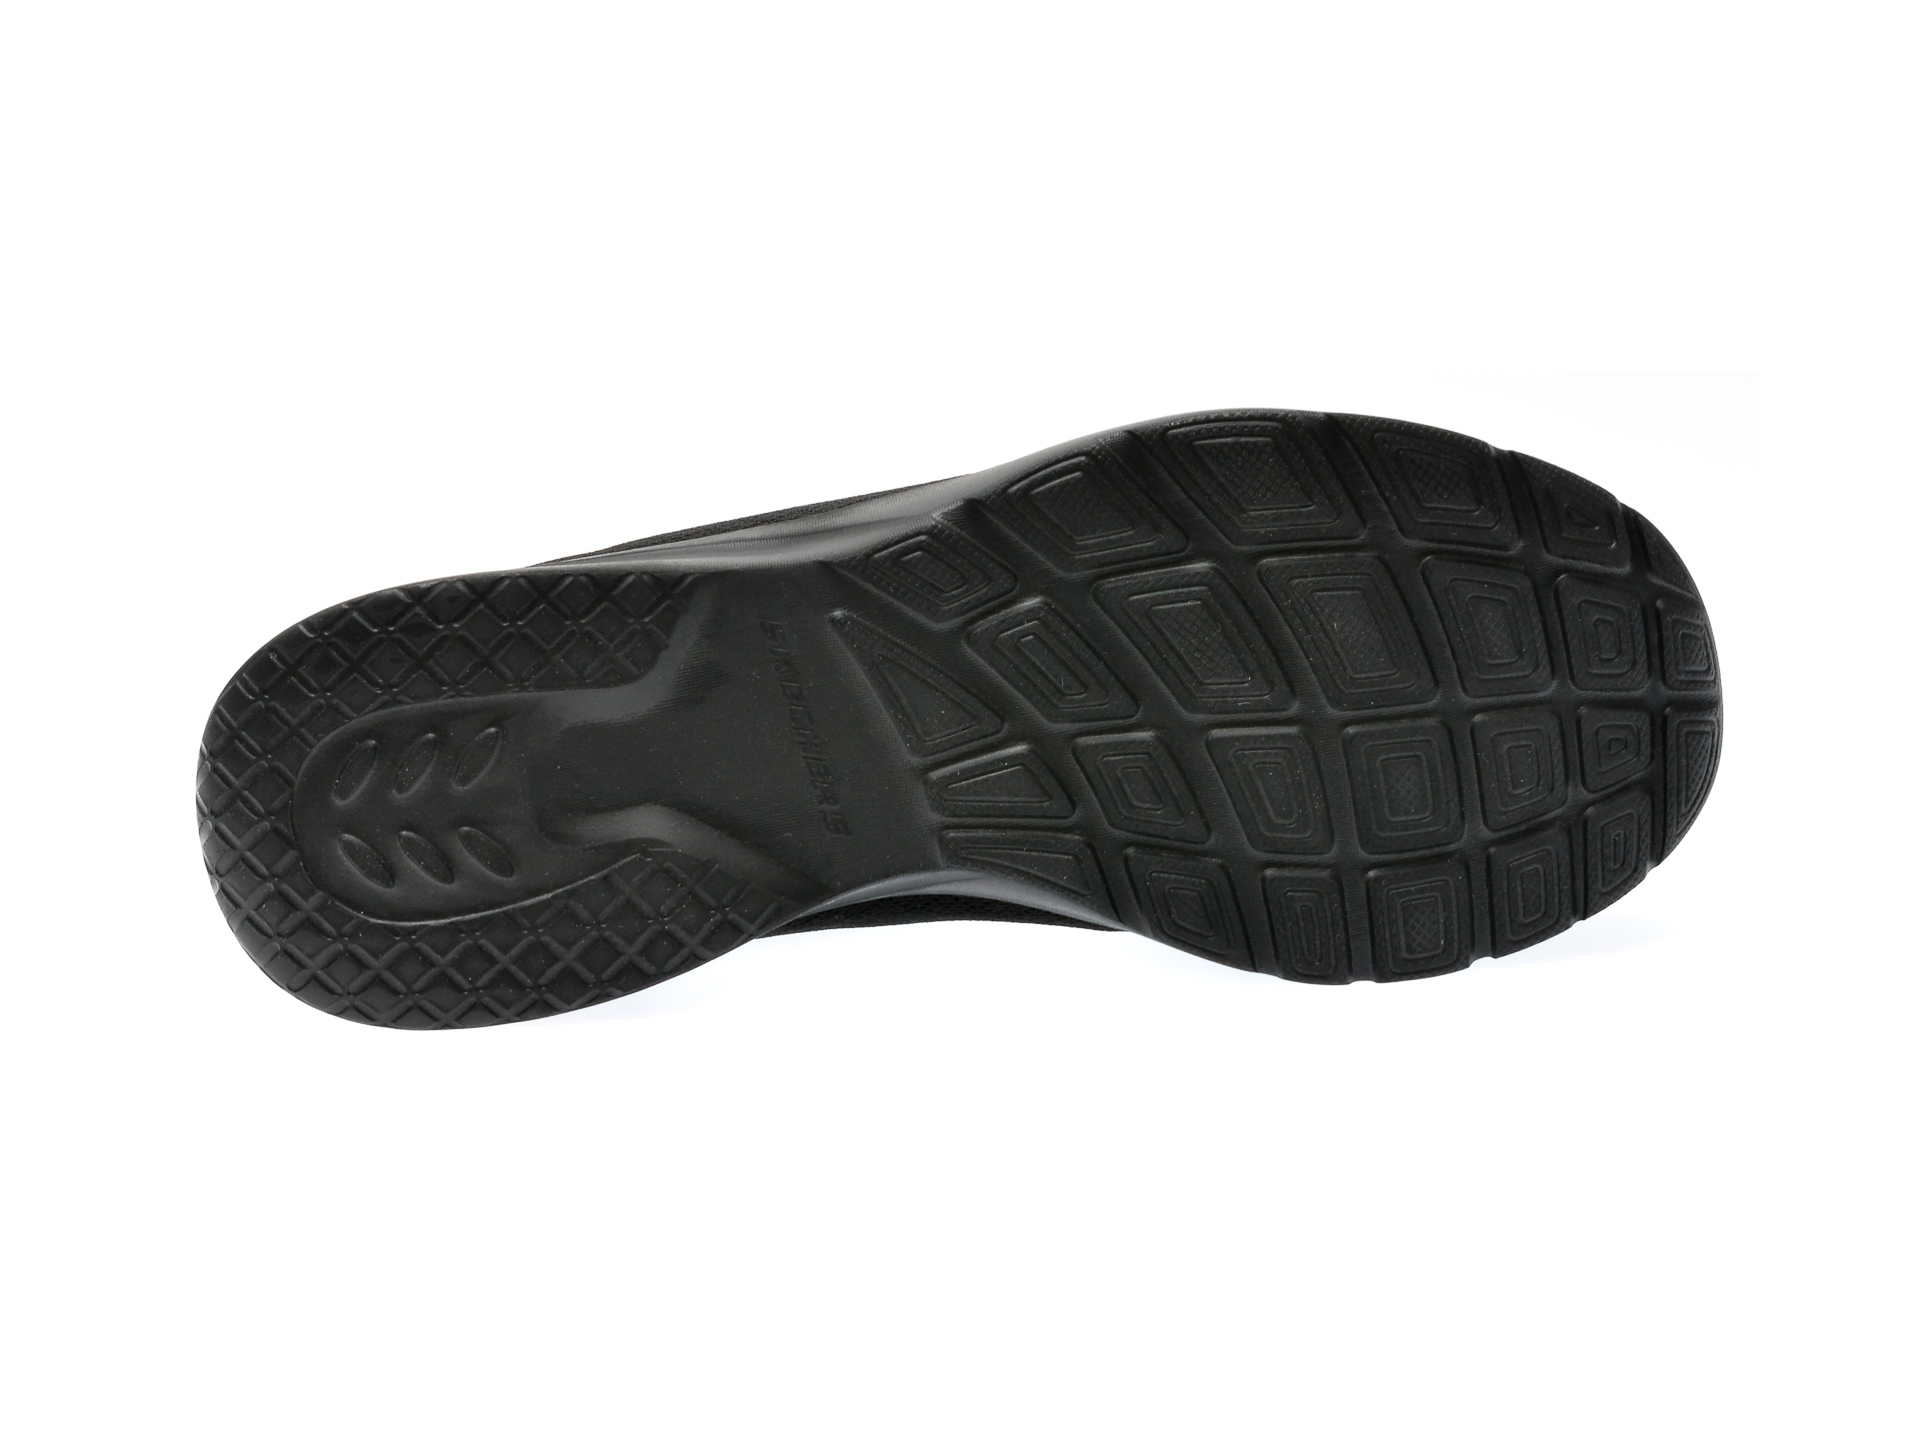 Pantofi SKECHERS negri, DYNAMIGHT 2.0, din material textil